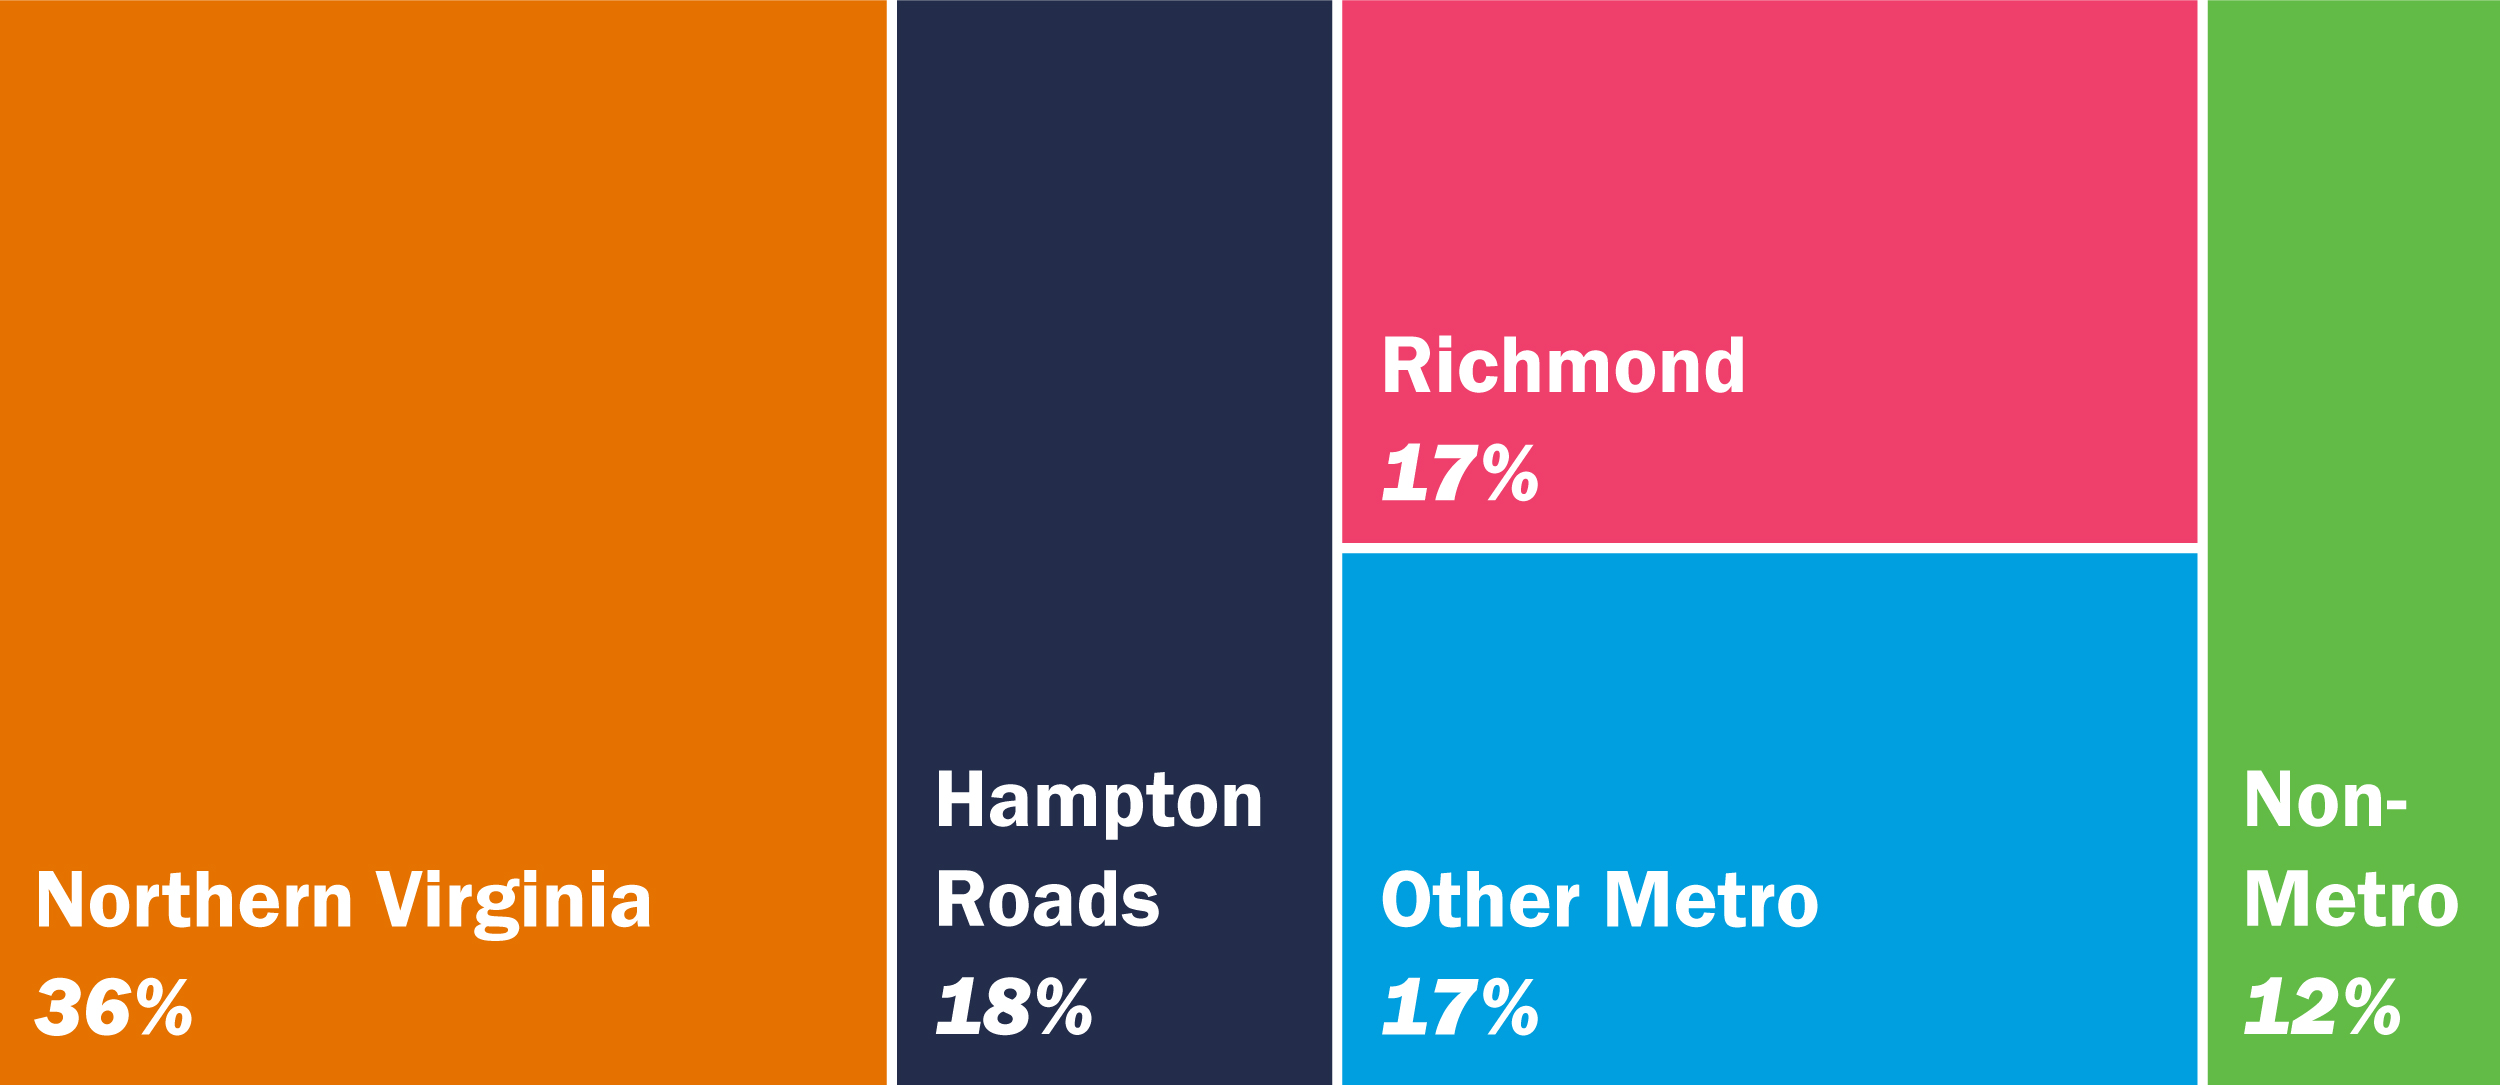 Northern Virginia 36%; Hampton Roads 18%; Richmond 17%; Other Metro 17%; Non-Metro 12%